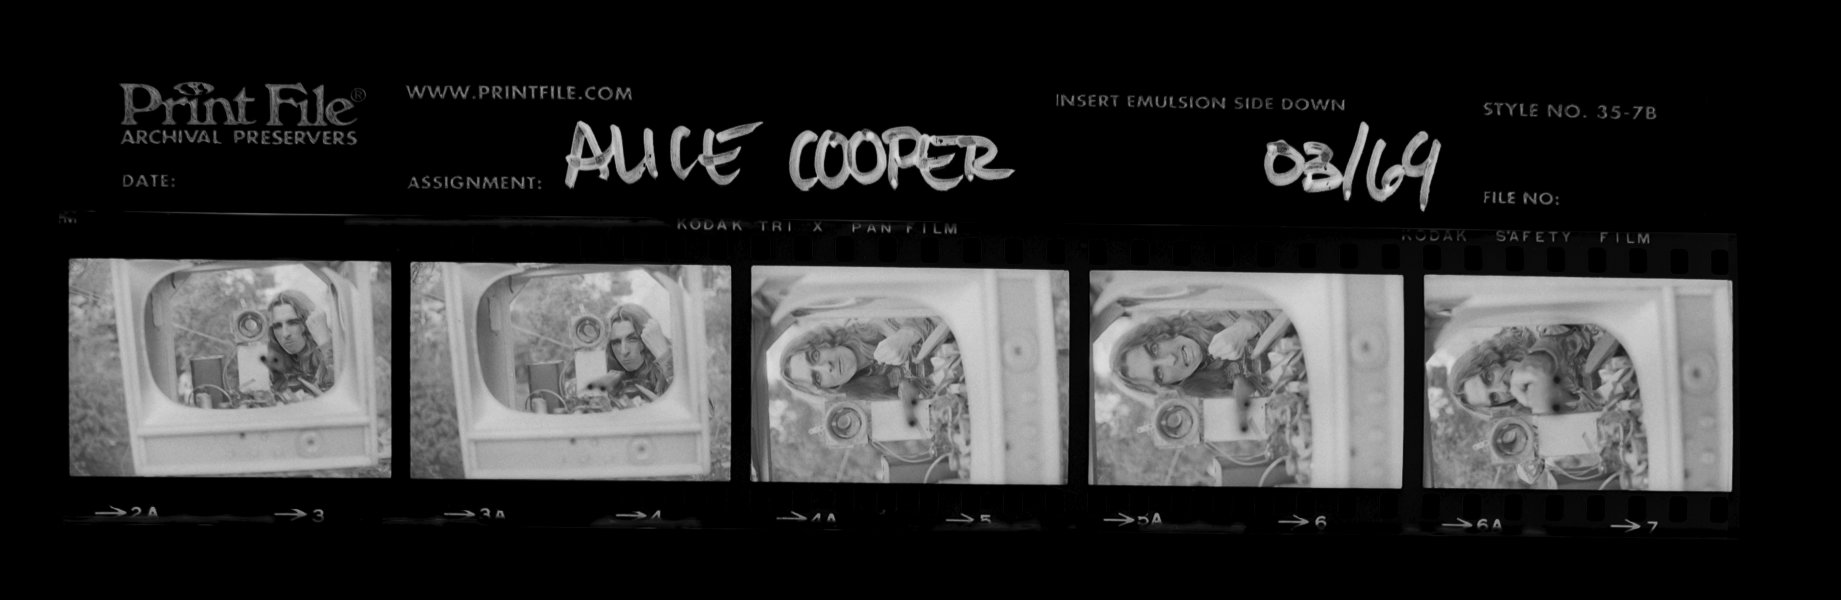 EC_AliceCooper_005: Alice Cooper